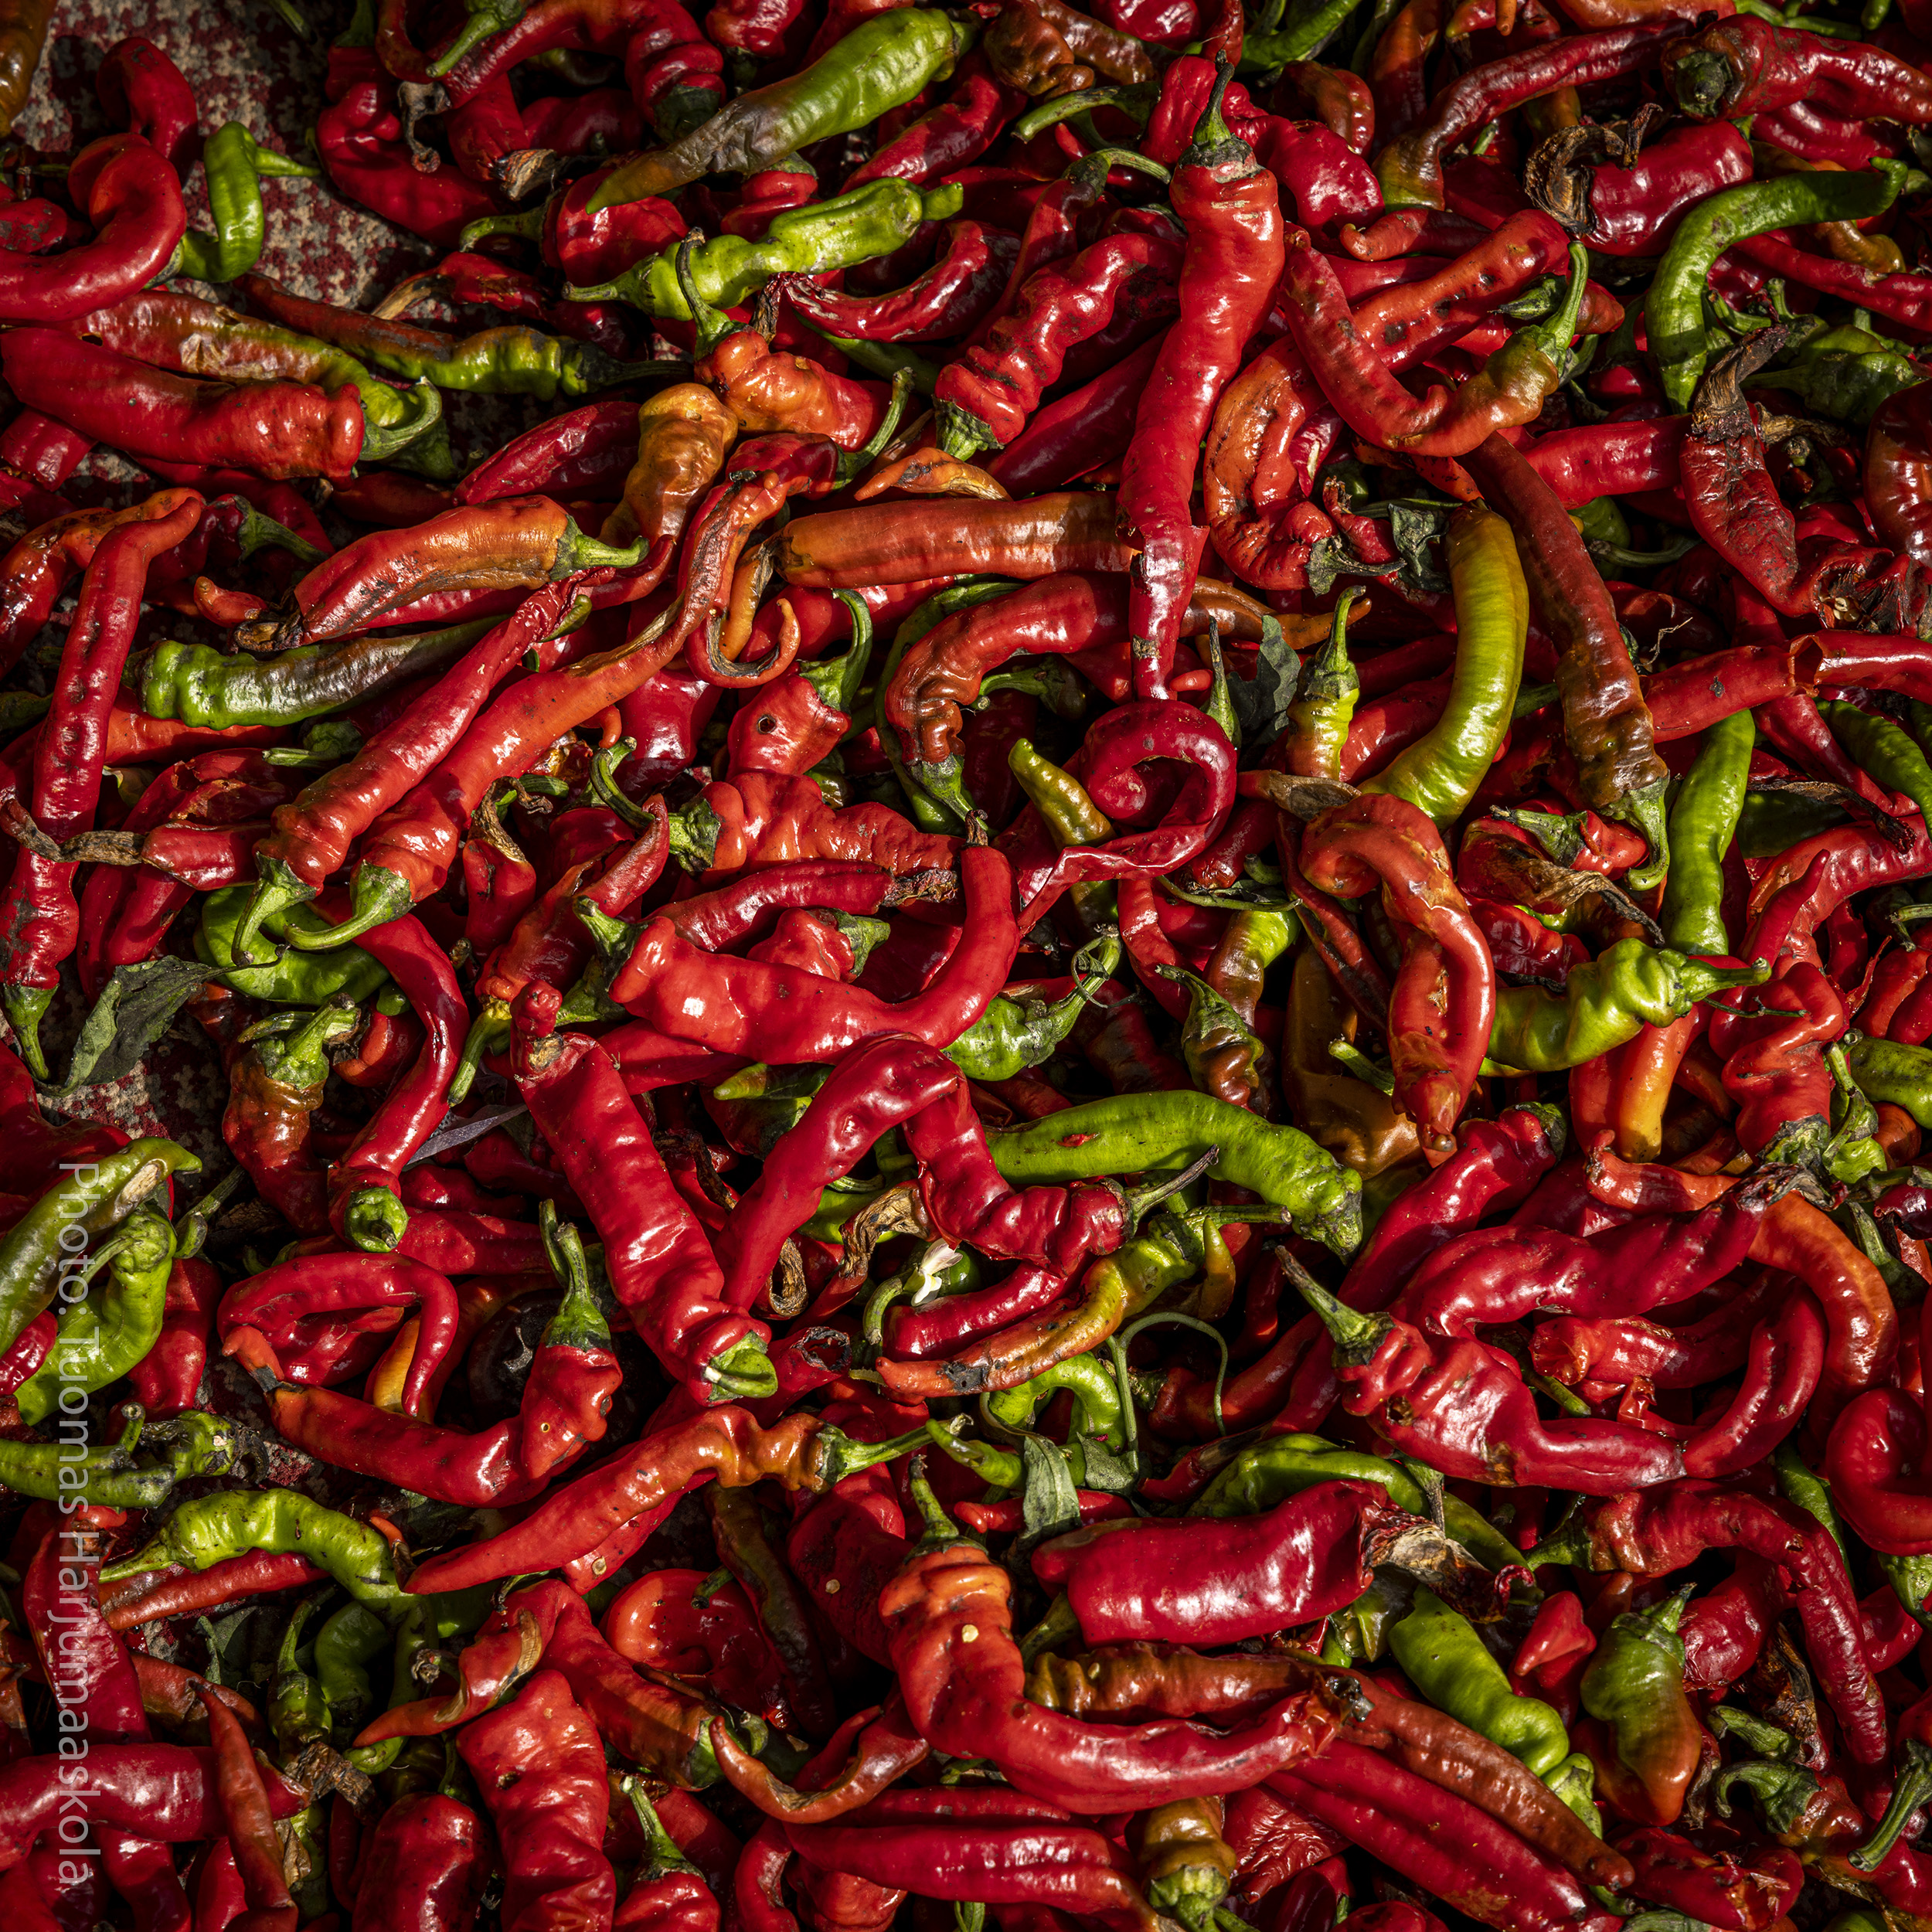 Red chili peppers at a Chinese food market. Photographer Tuomas Harjumaaskola.